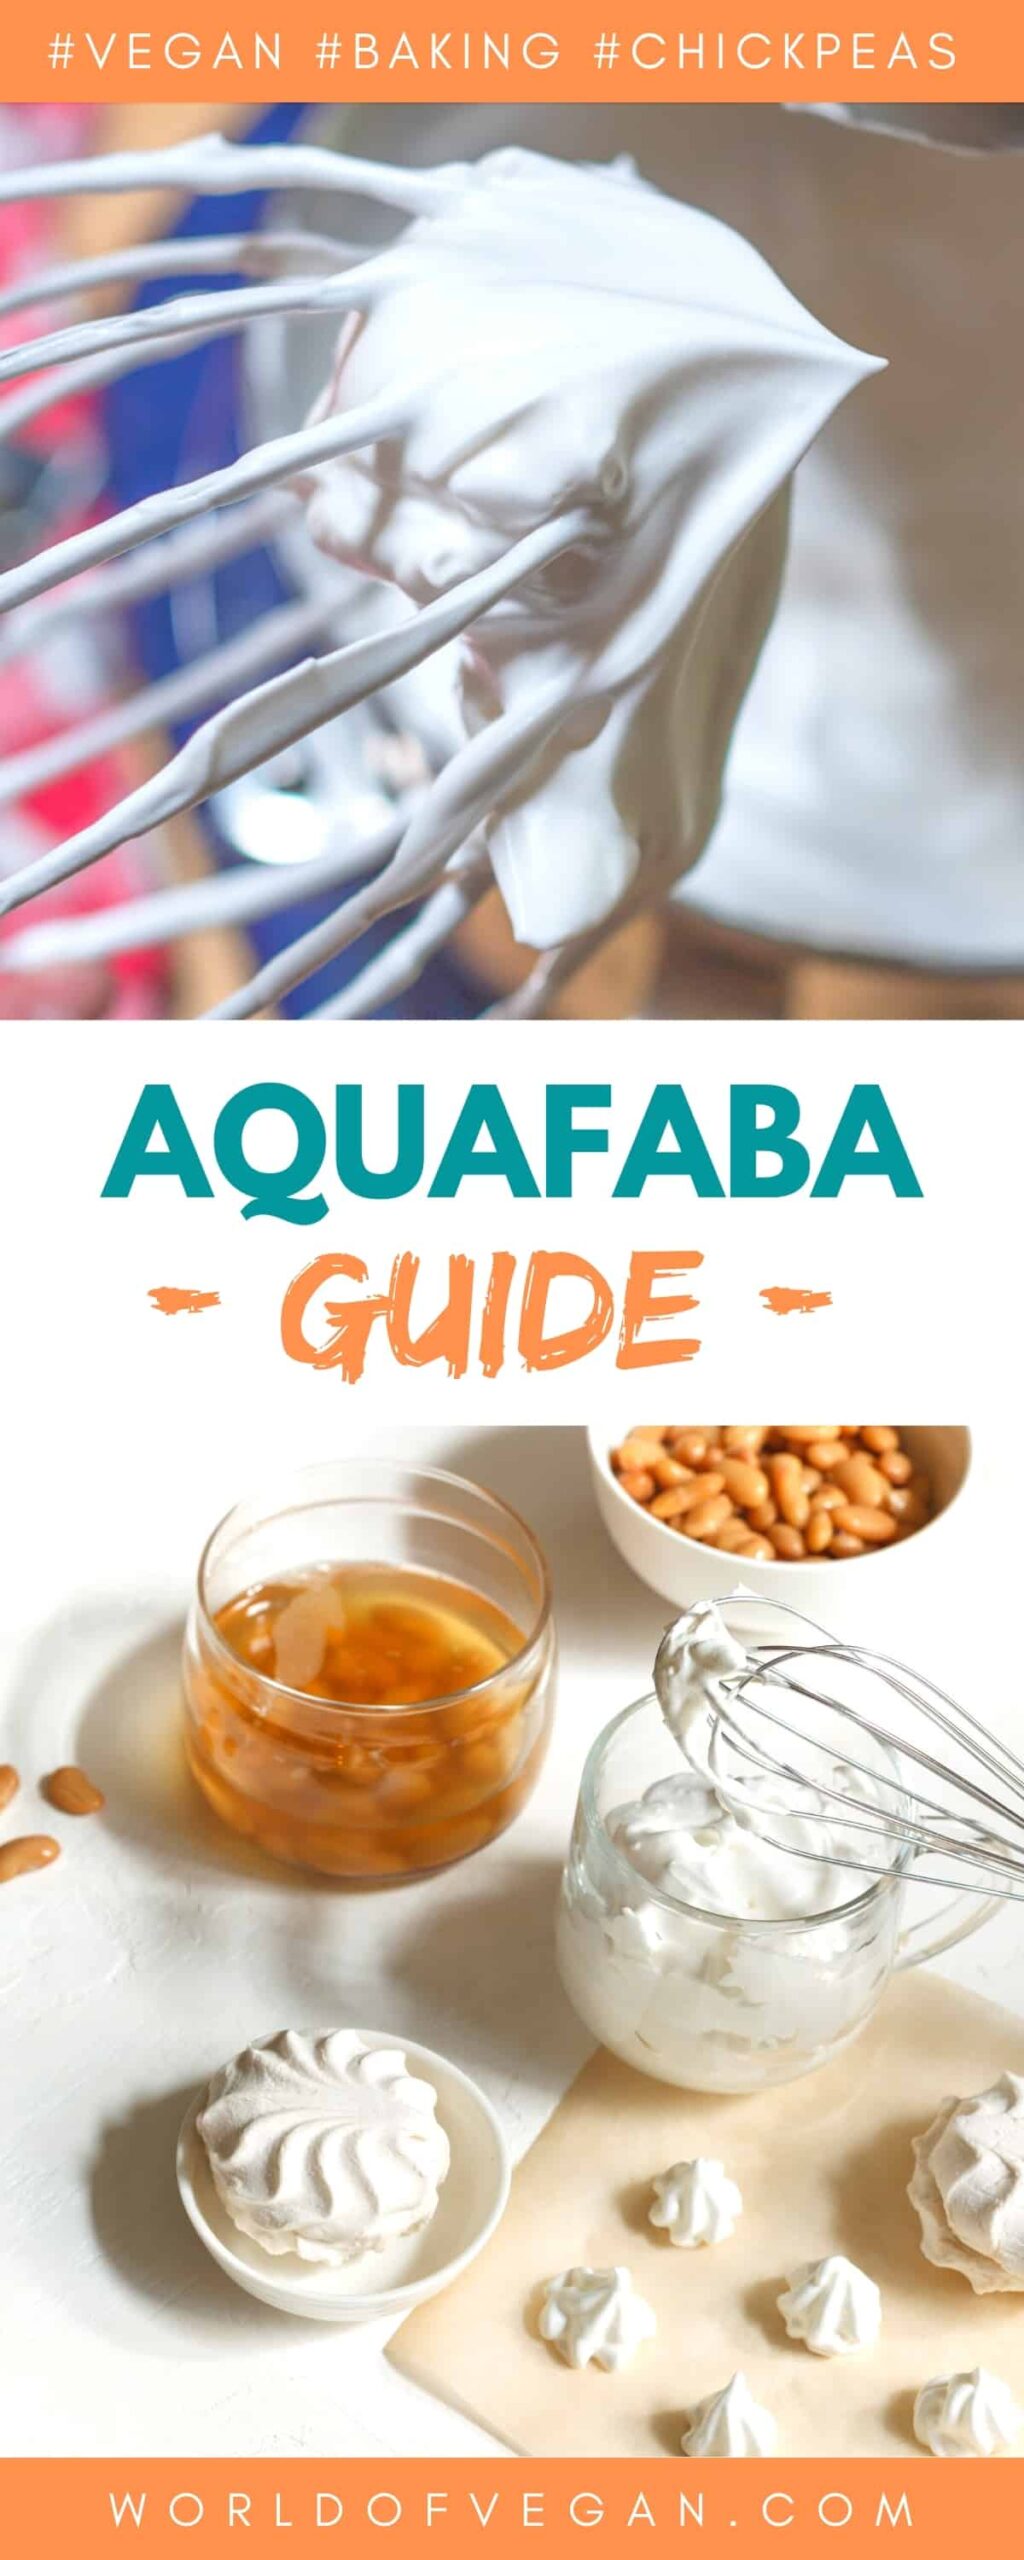 Guide to Vegan Baking With Aquafaba